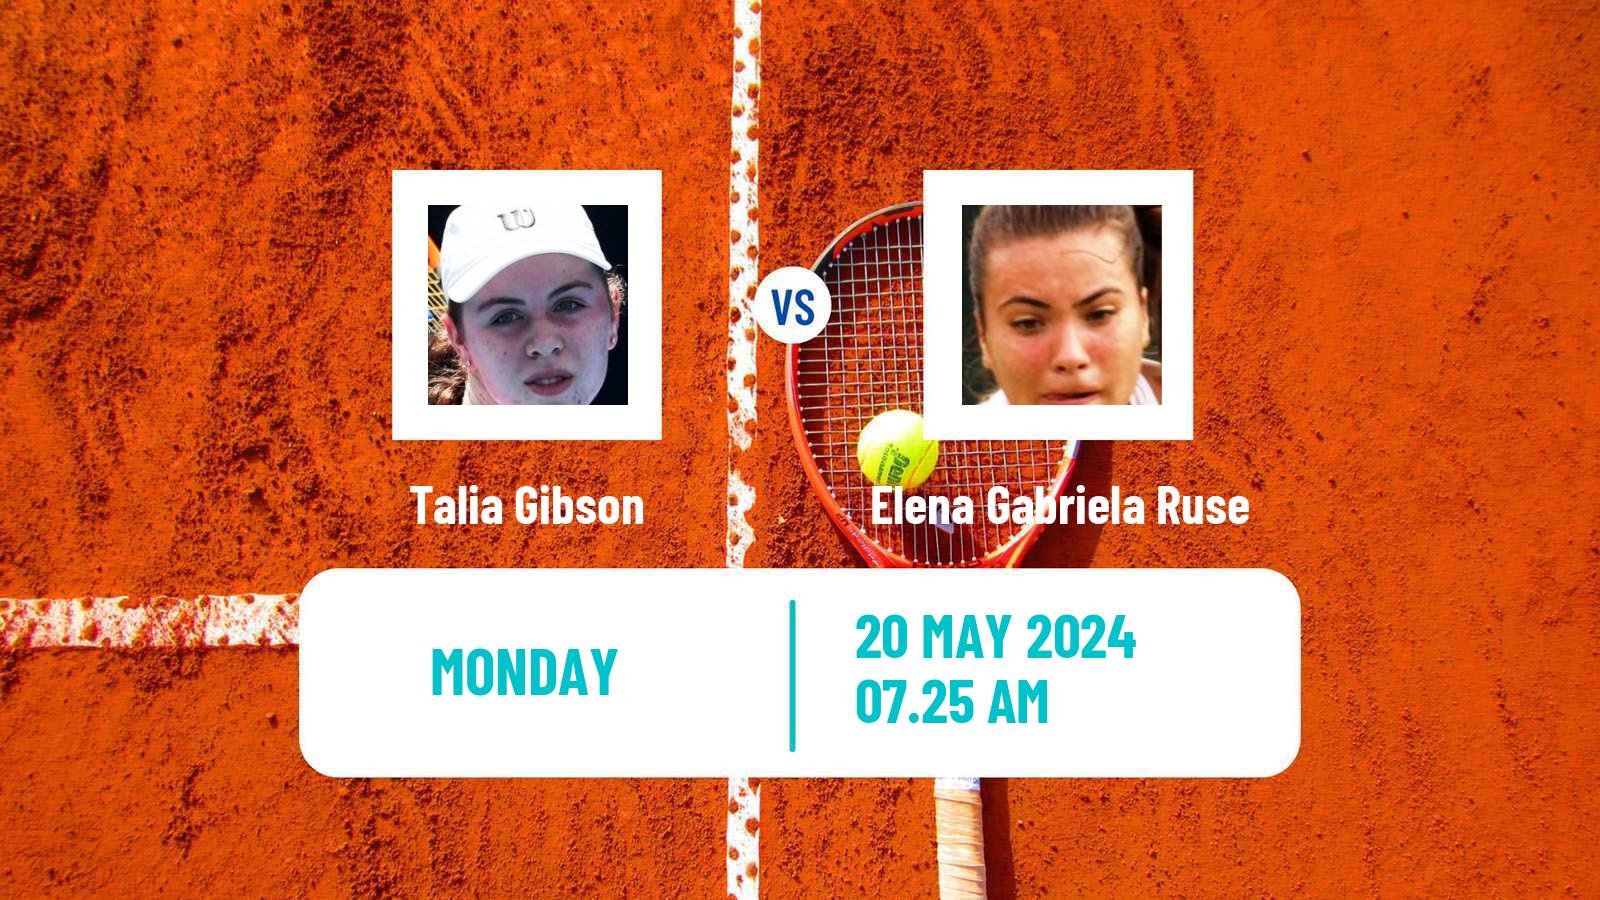 Tennis WTA Roland Garros Talia Gibson - Elena Gabriela Ruse